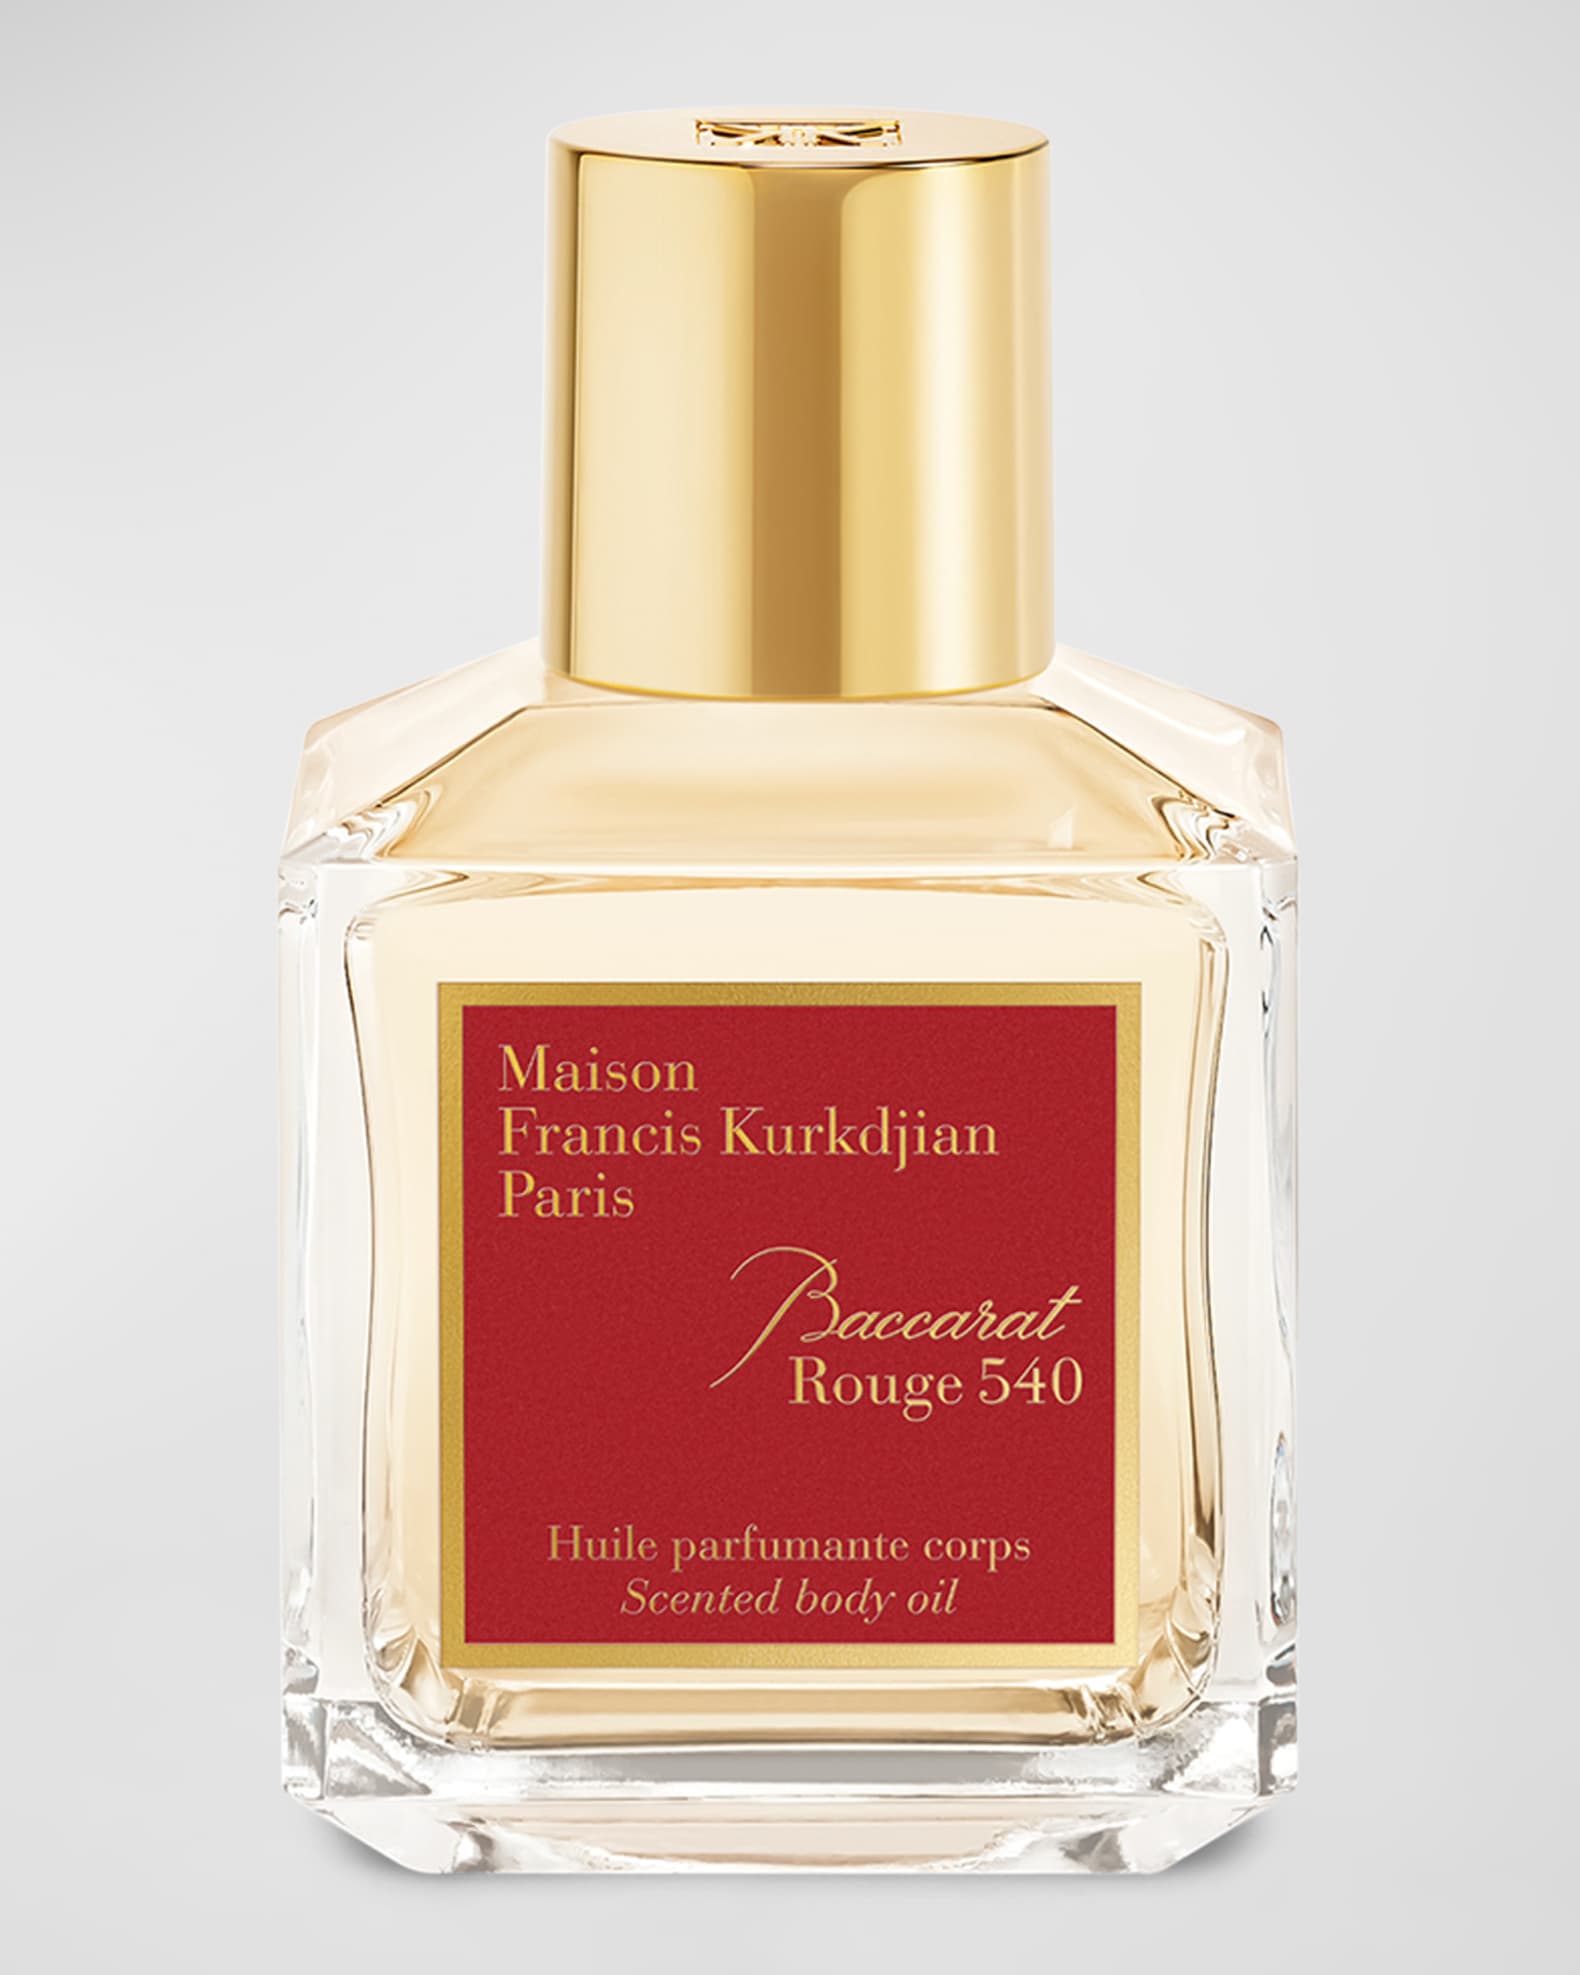 How Maison Francis Kurkdjian Created the Iconic Baccarat Rouge 540